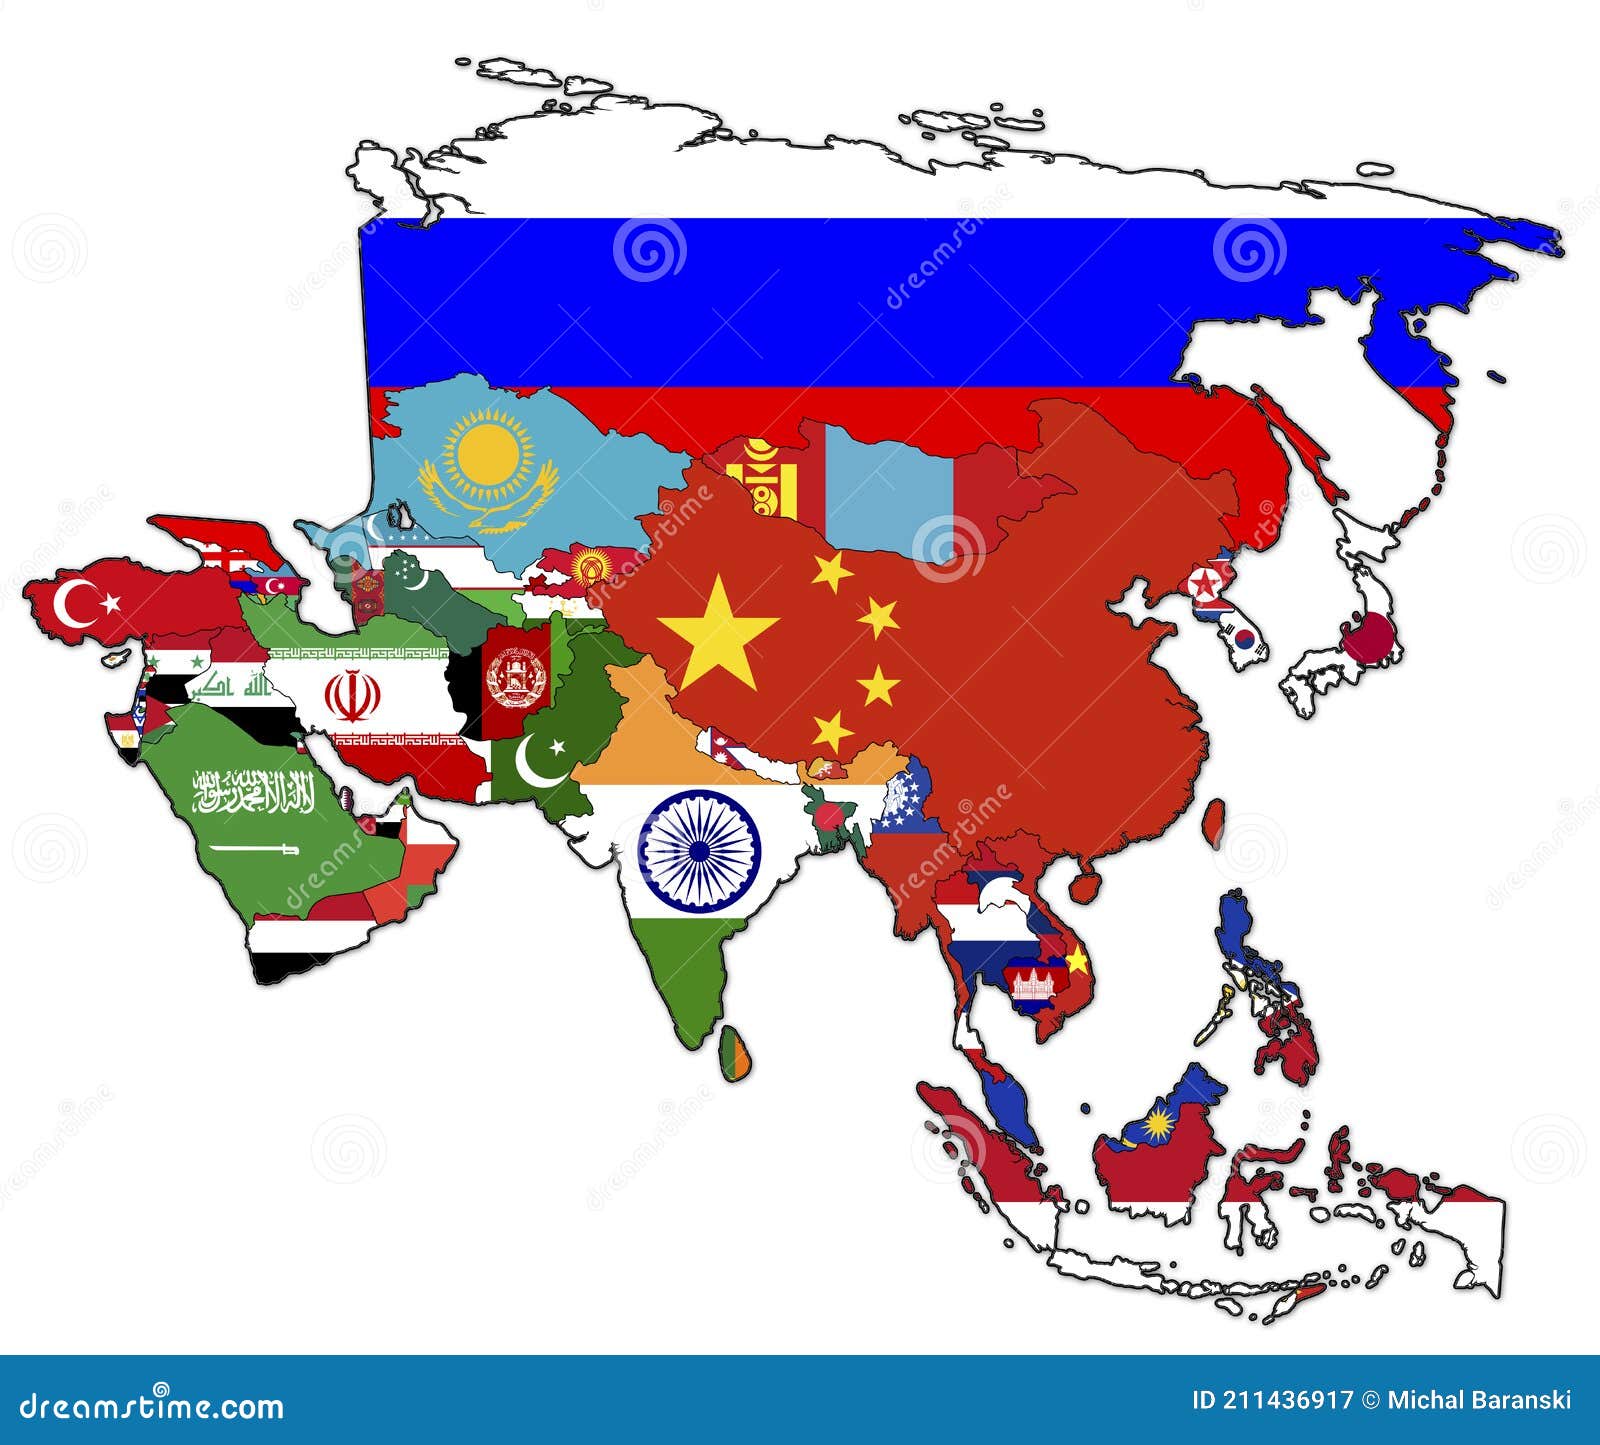 Political map of asia stock illustration. Illustration of flag - 211436917